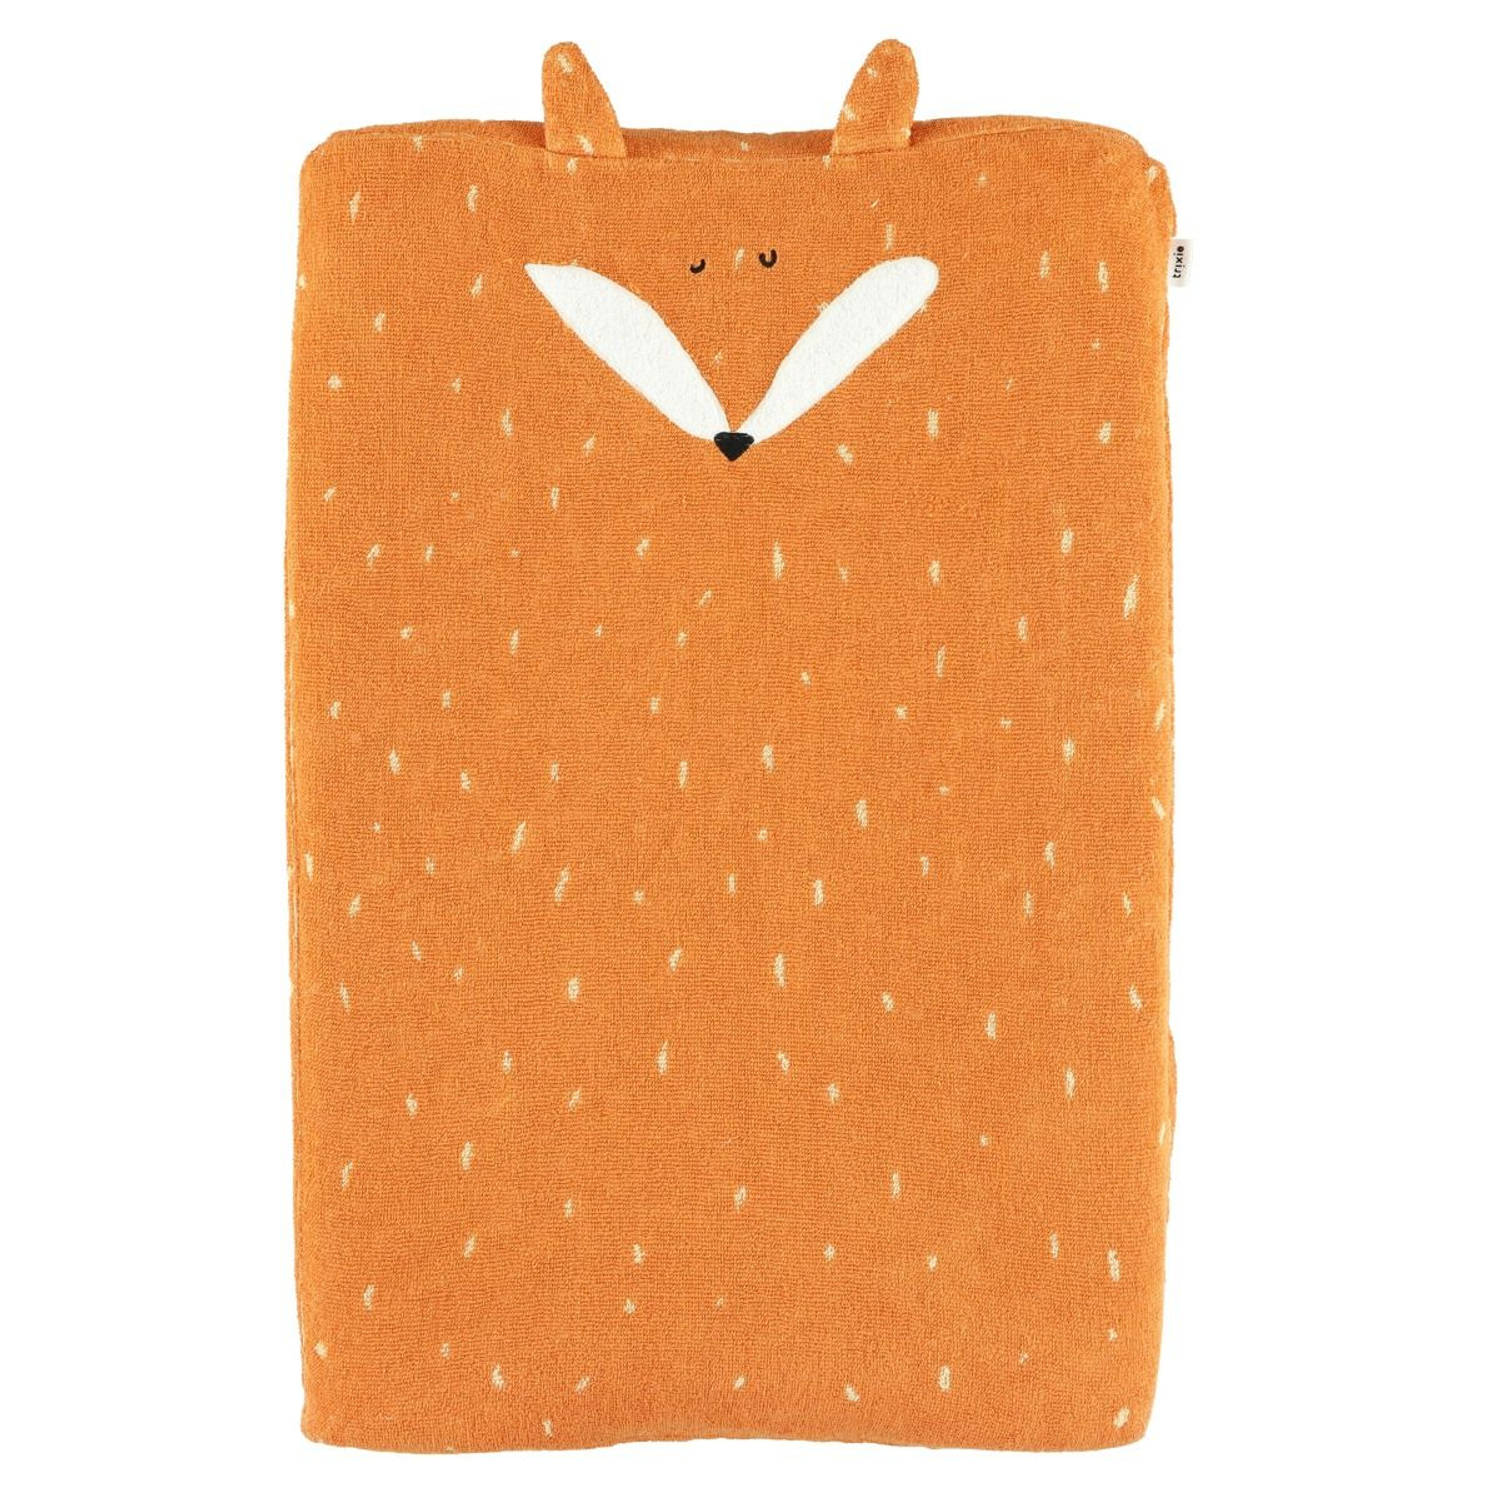 aankleedkussenhoes Mr. Fox 70 x 45 oranje |